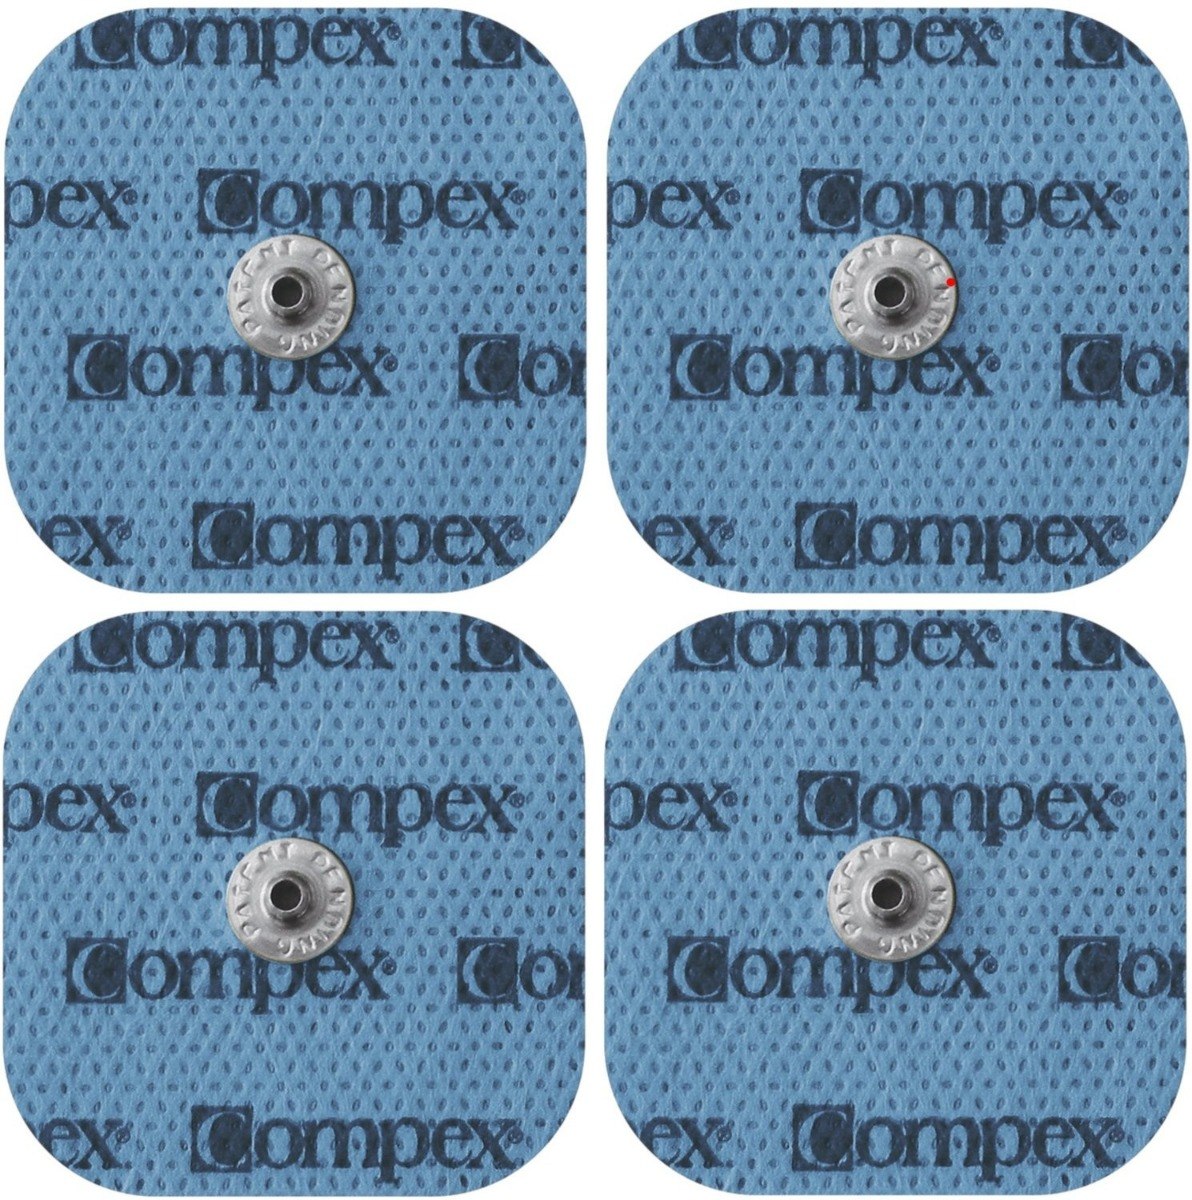 ELECTRODOS COMPEX PERFORMANCE EASYSNAP 5x10 1 SNAP -  ®